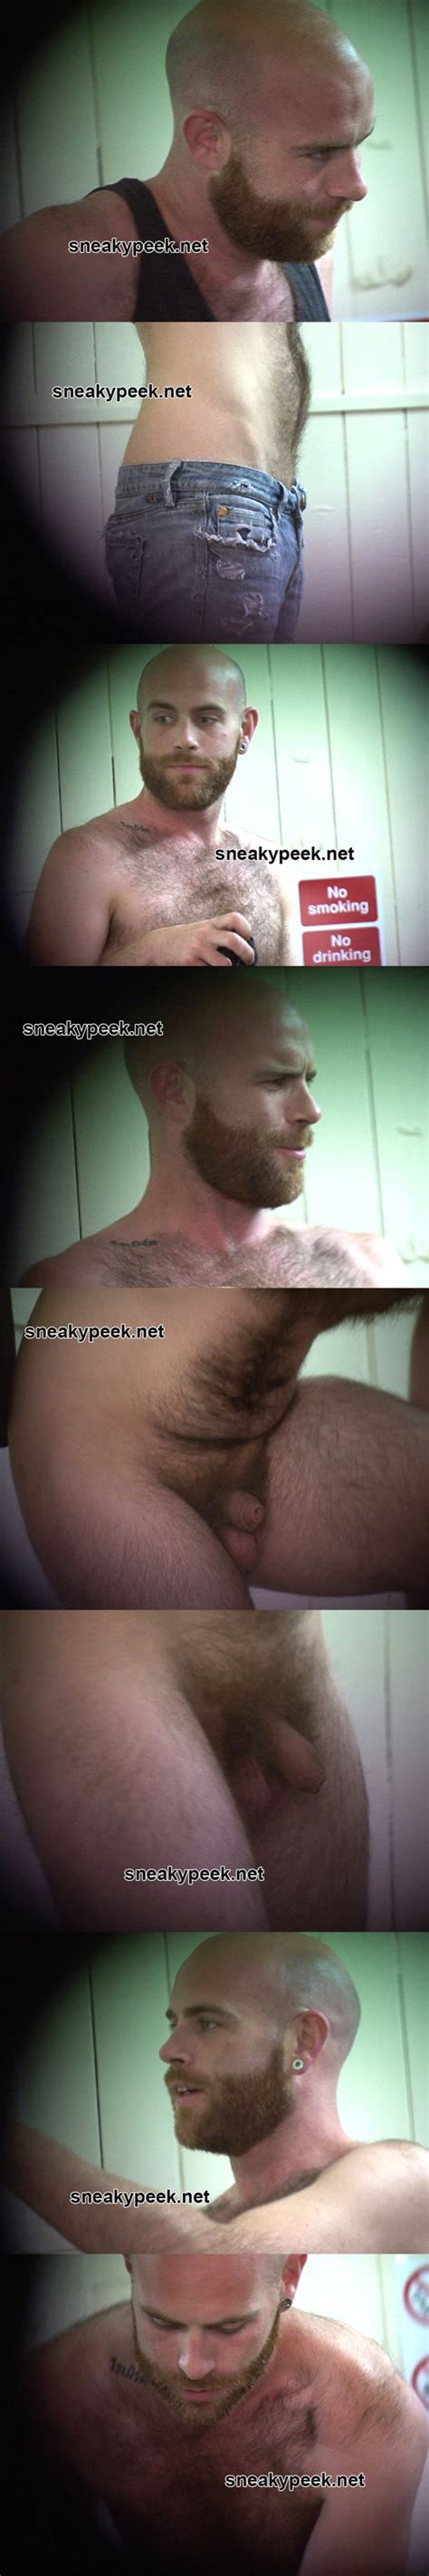 hairy man caught undressing spycamfromguys hidden cams spying on men